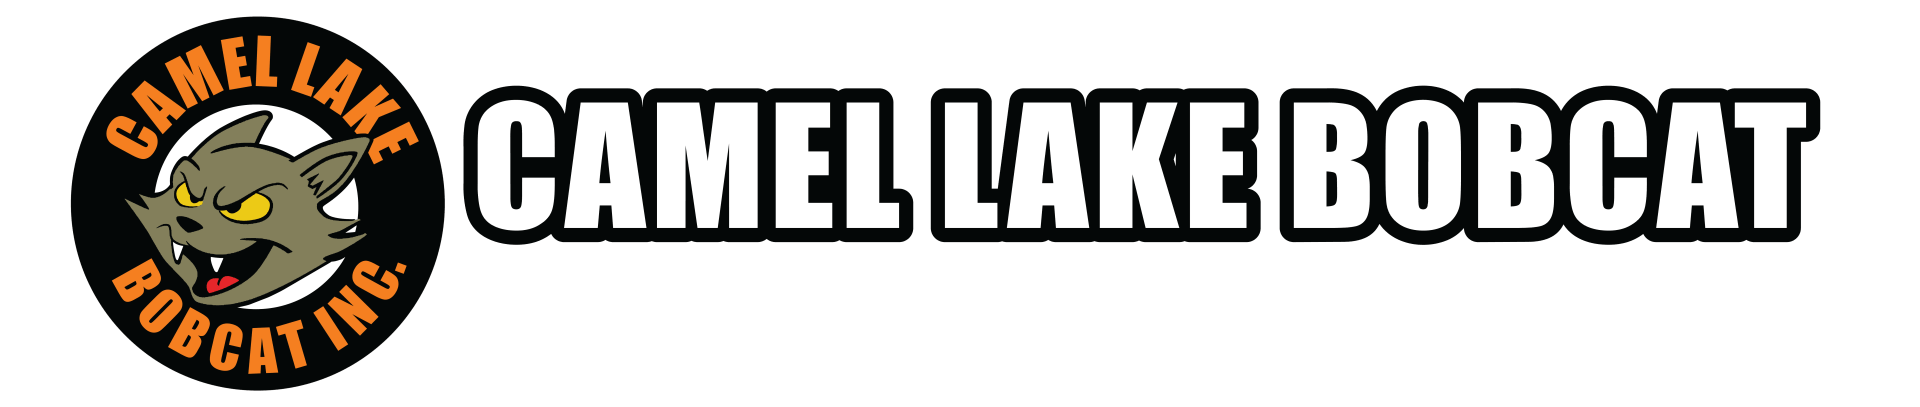 Camel Lake Bobcat and Landscaping Inc